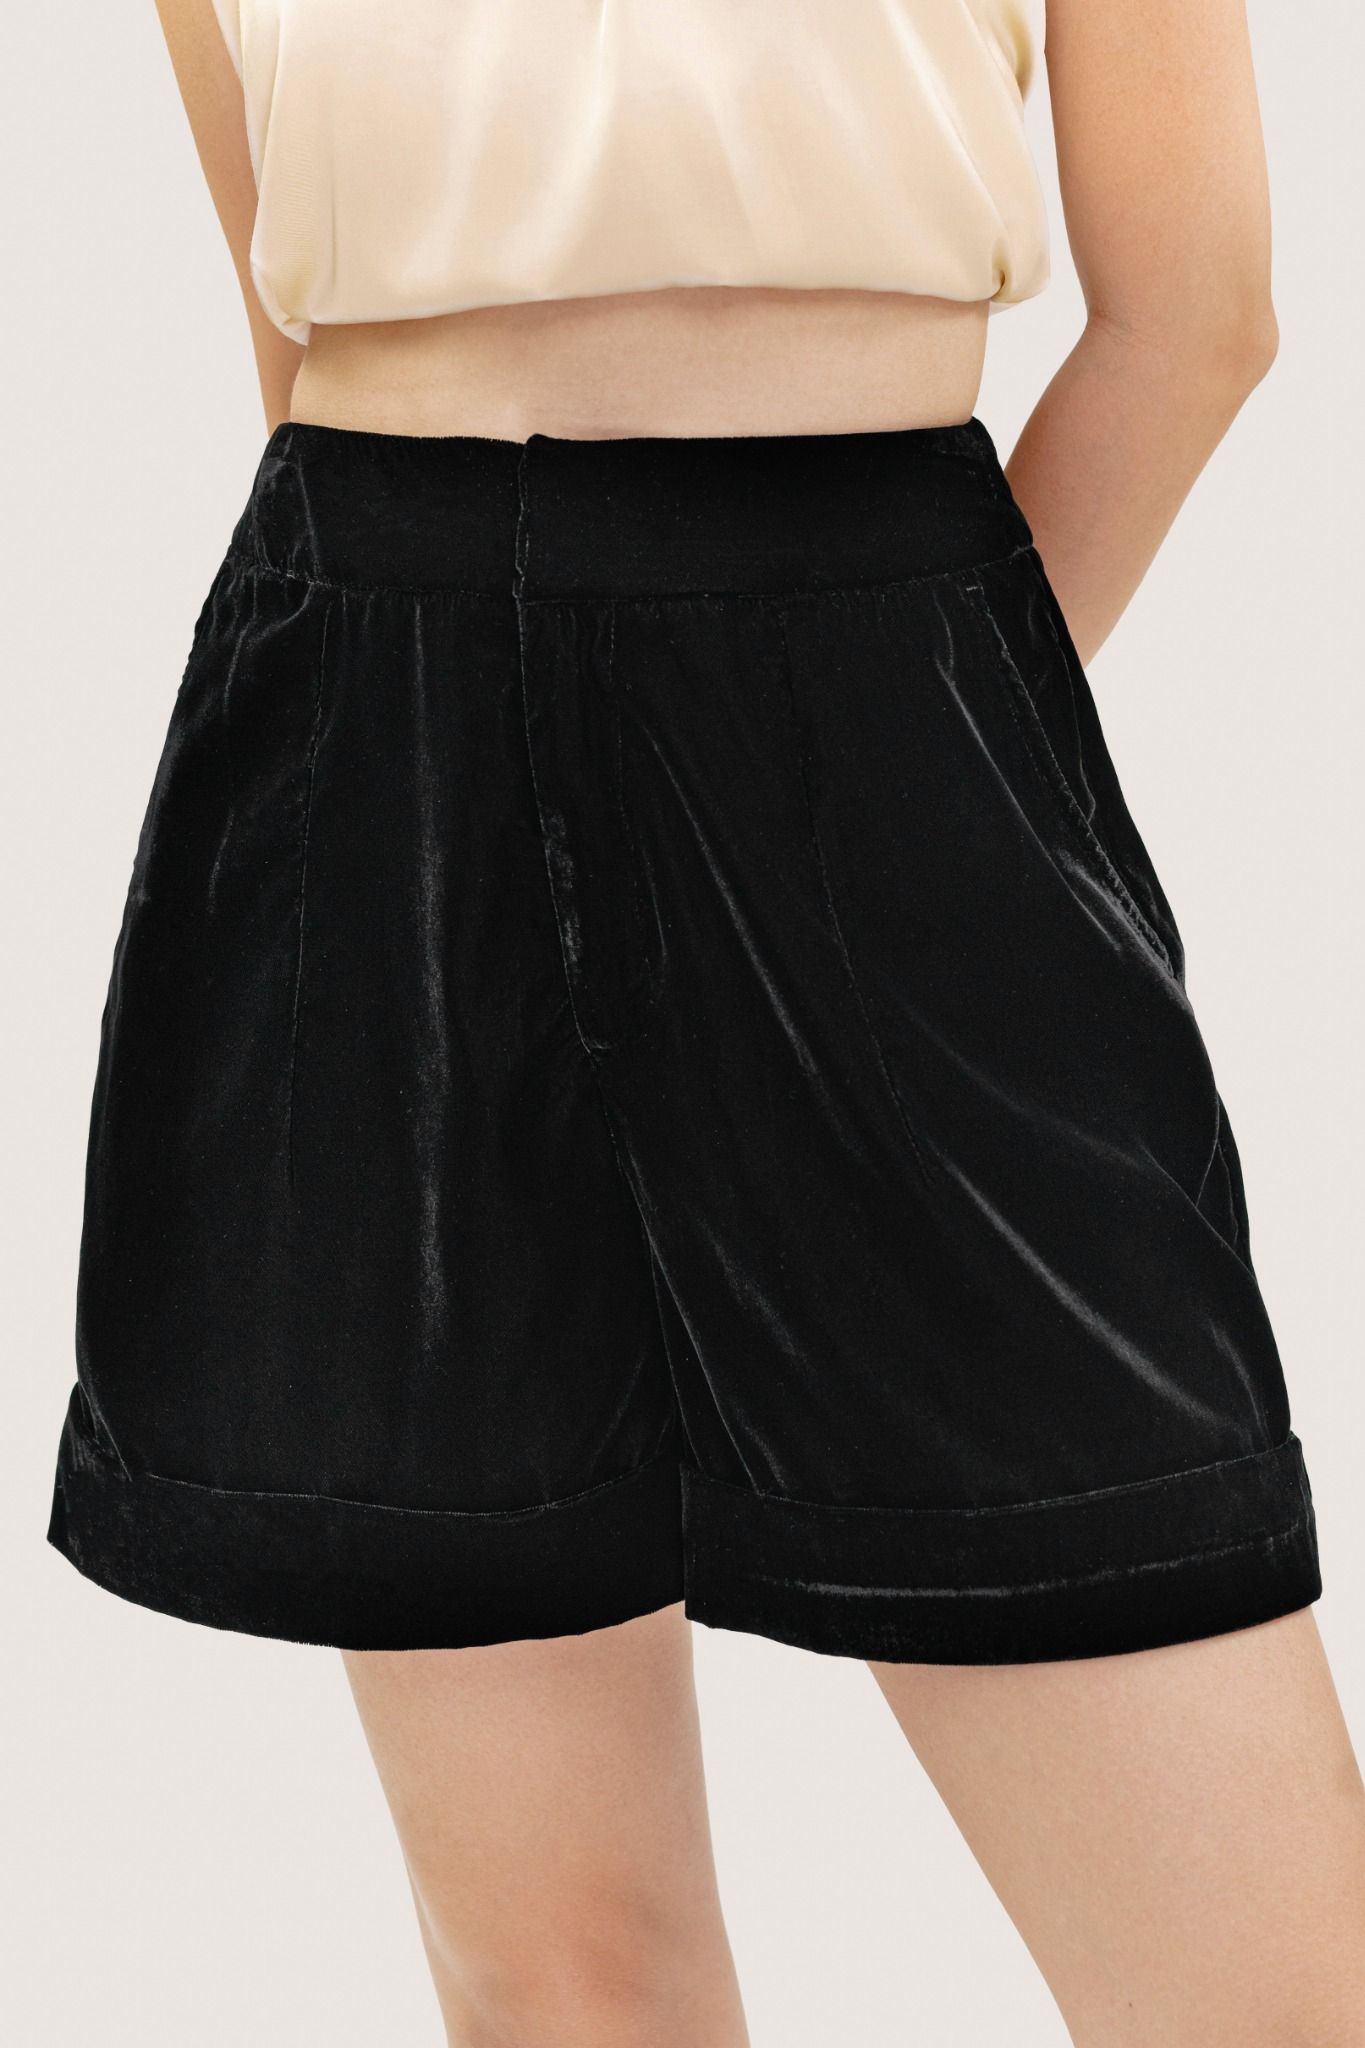  Black Velour Shorts 